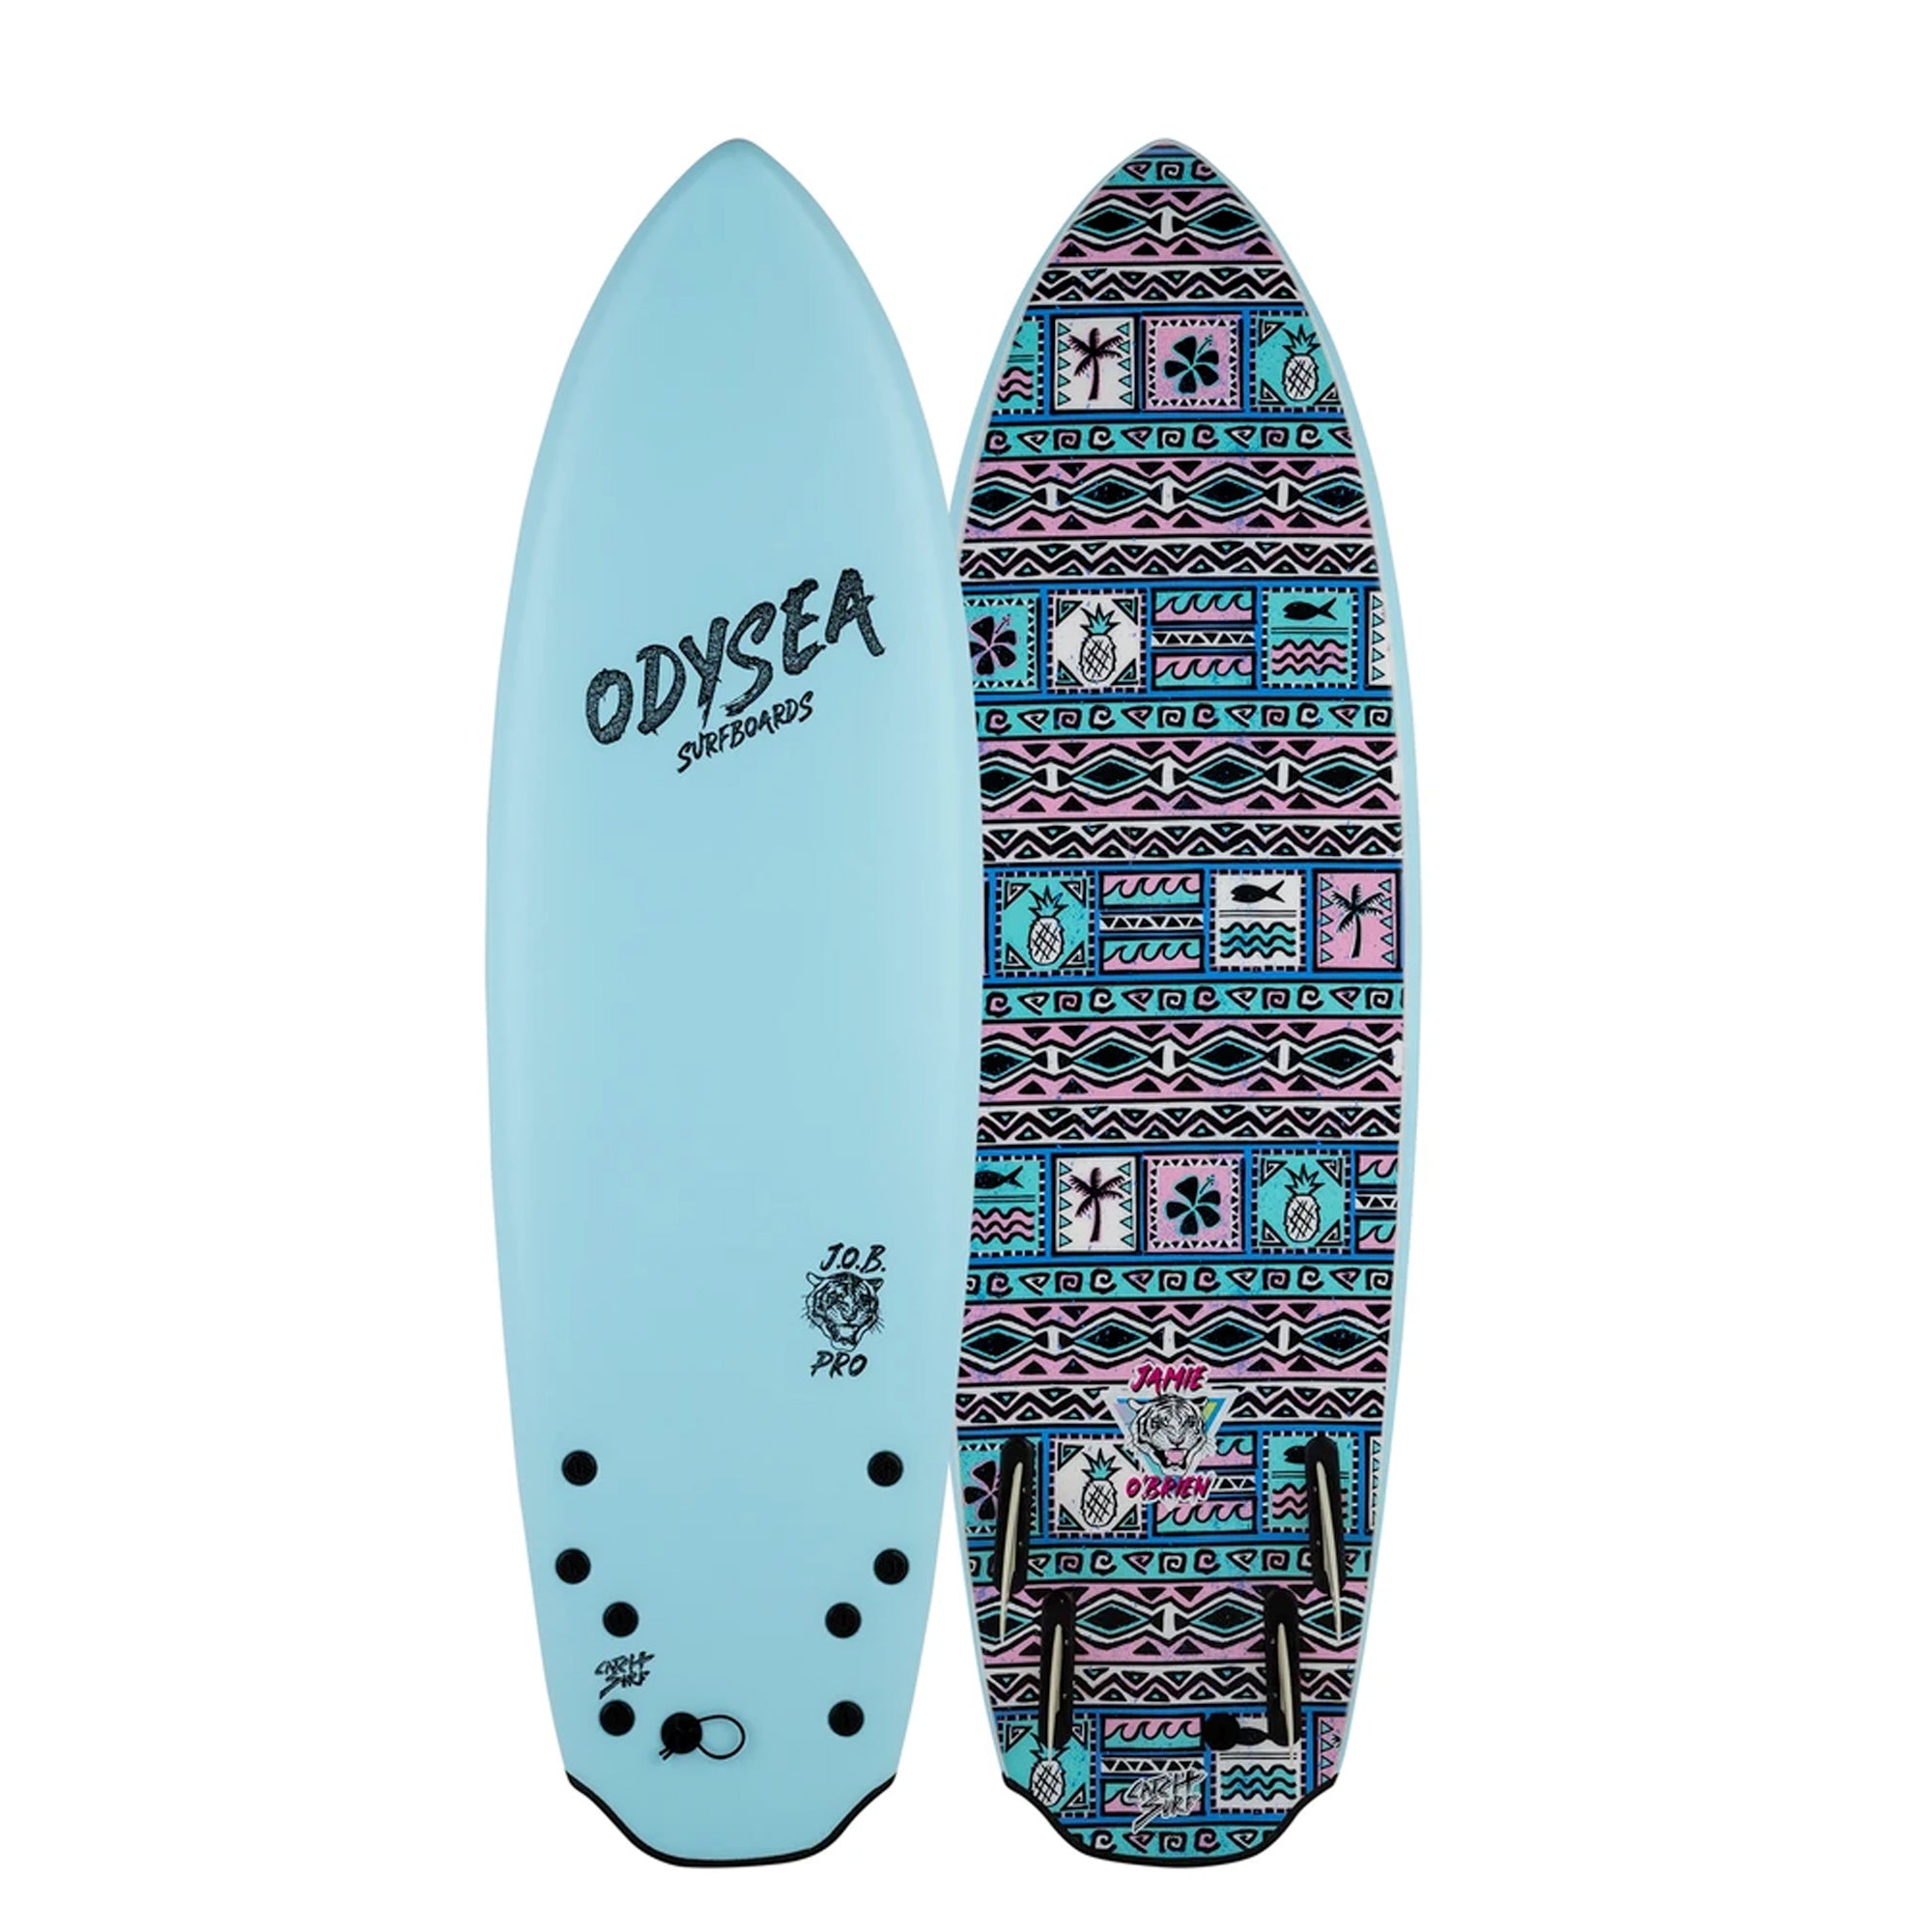 Catch Surf Odysea 5'8 JOB Pro Quad Soft Surfboard